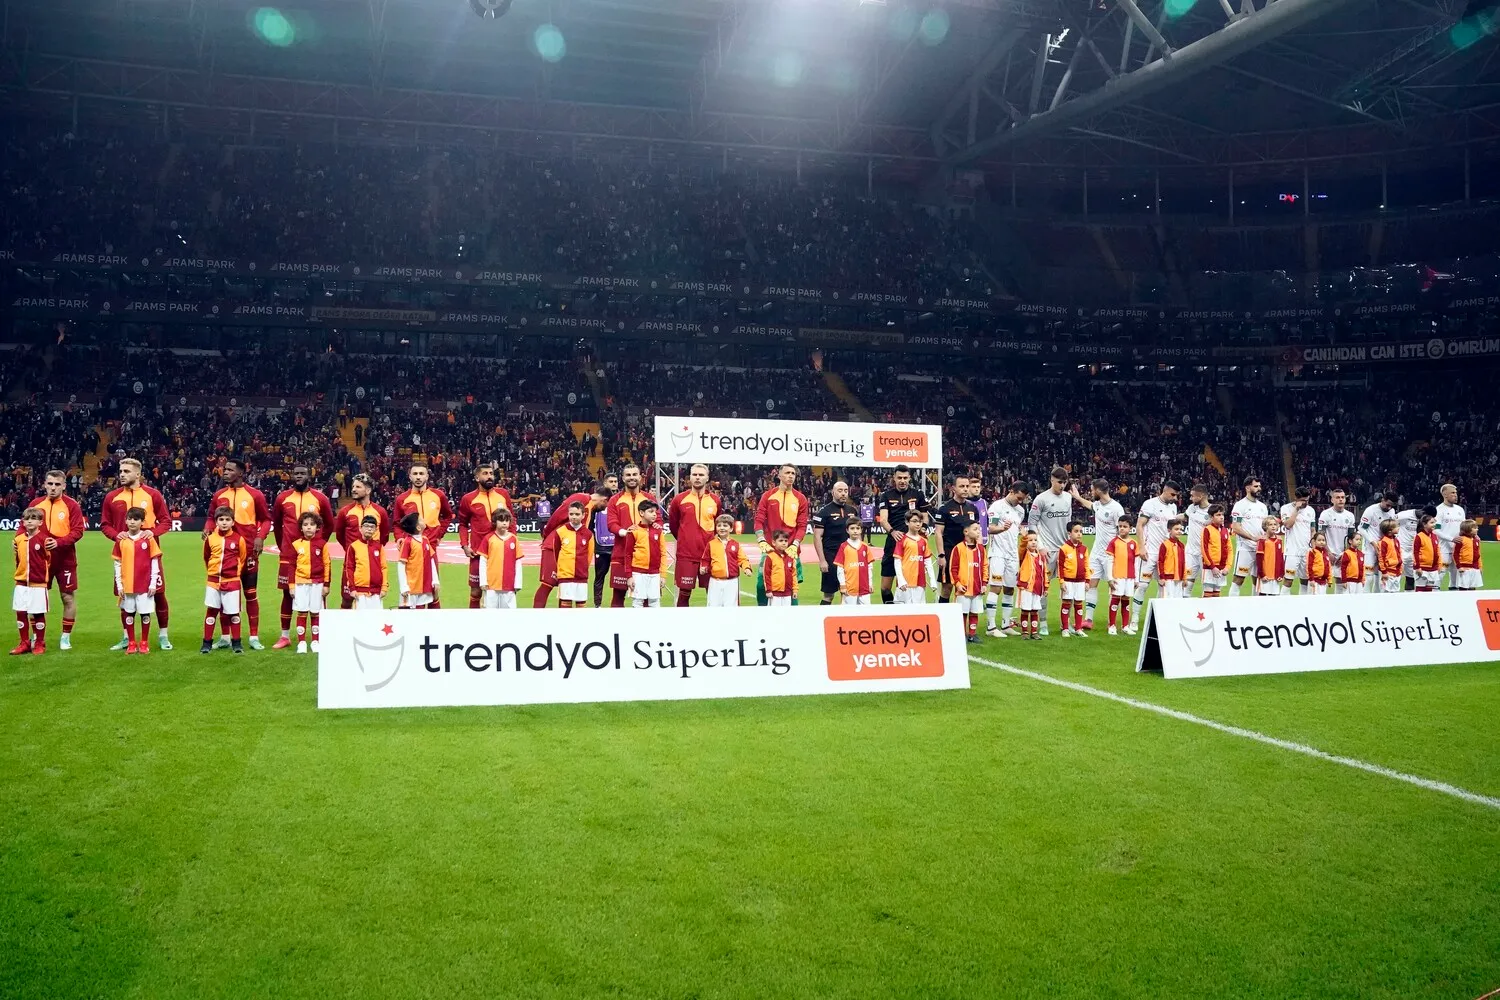 Gencgazete Spor Galatasaray Secim (9)